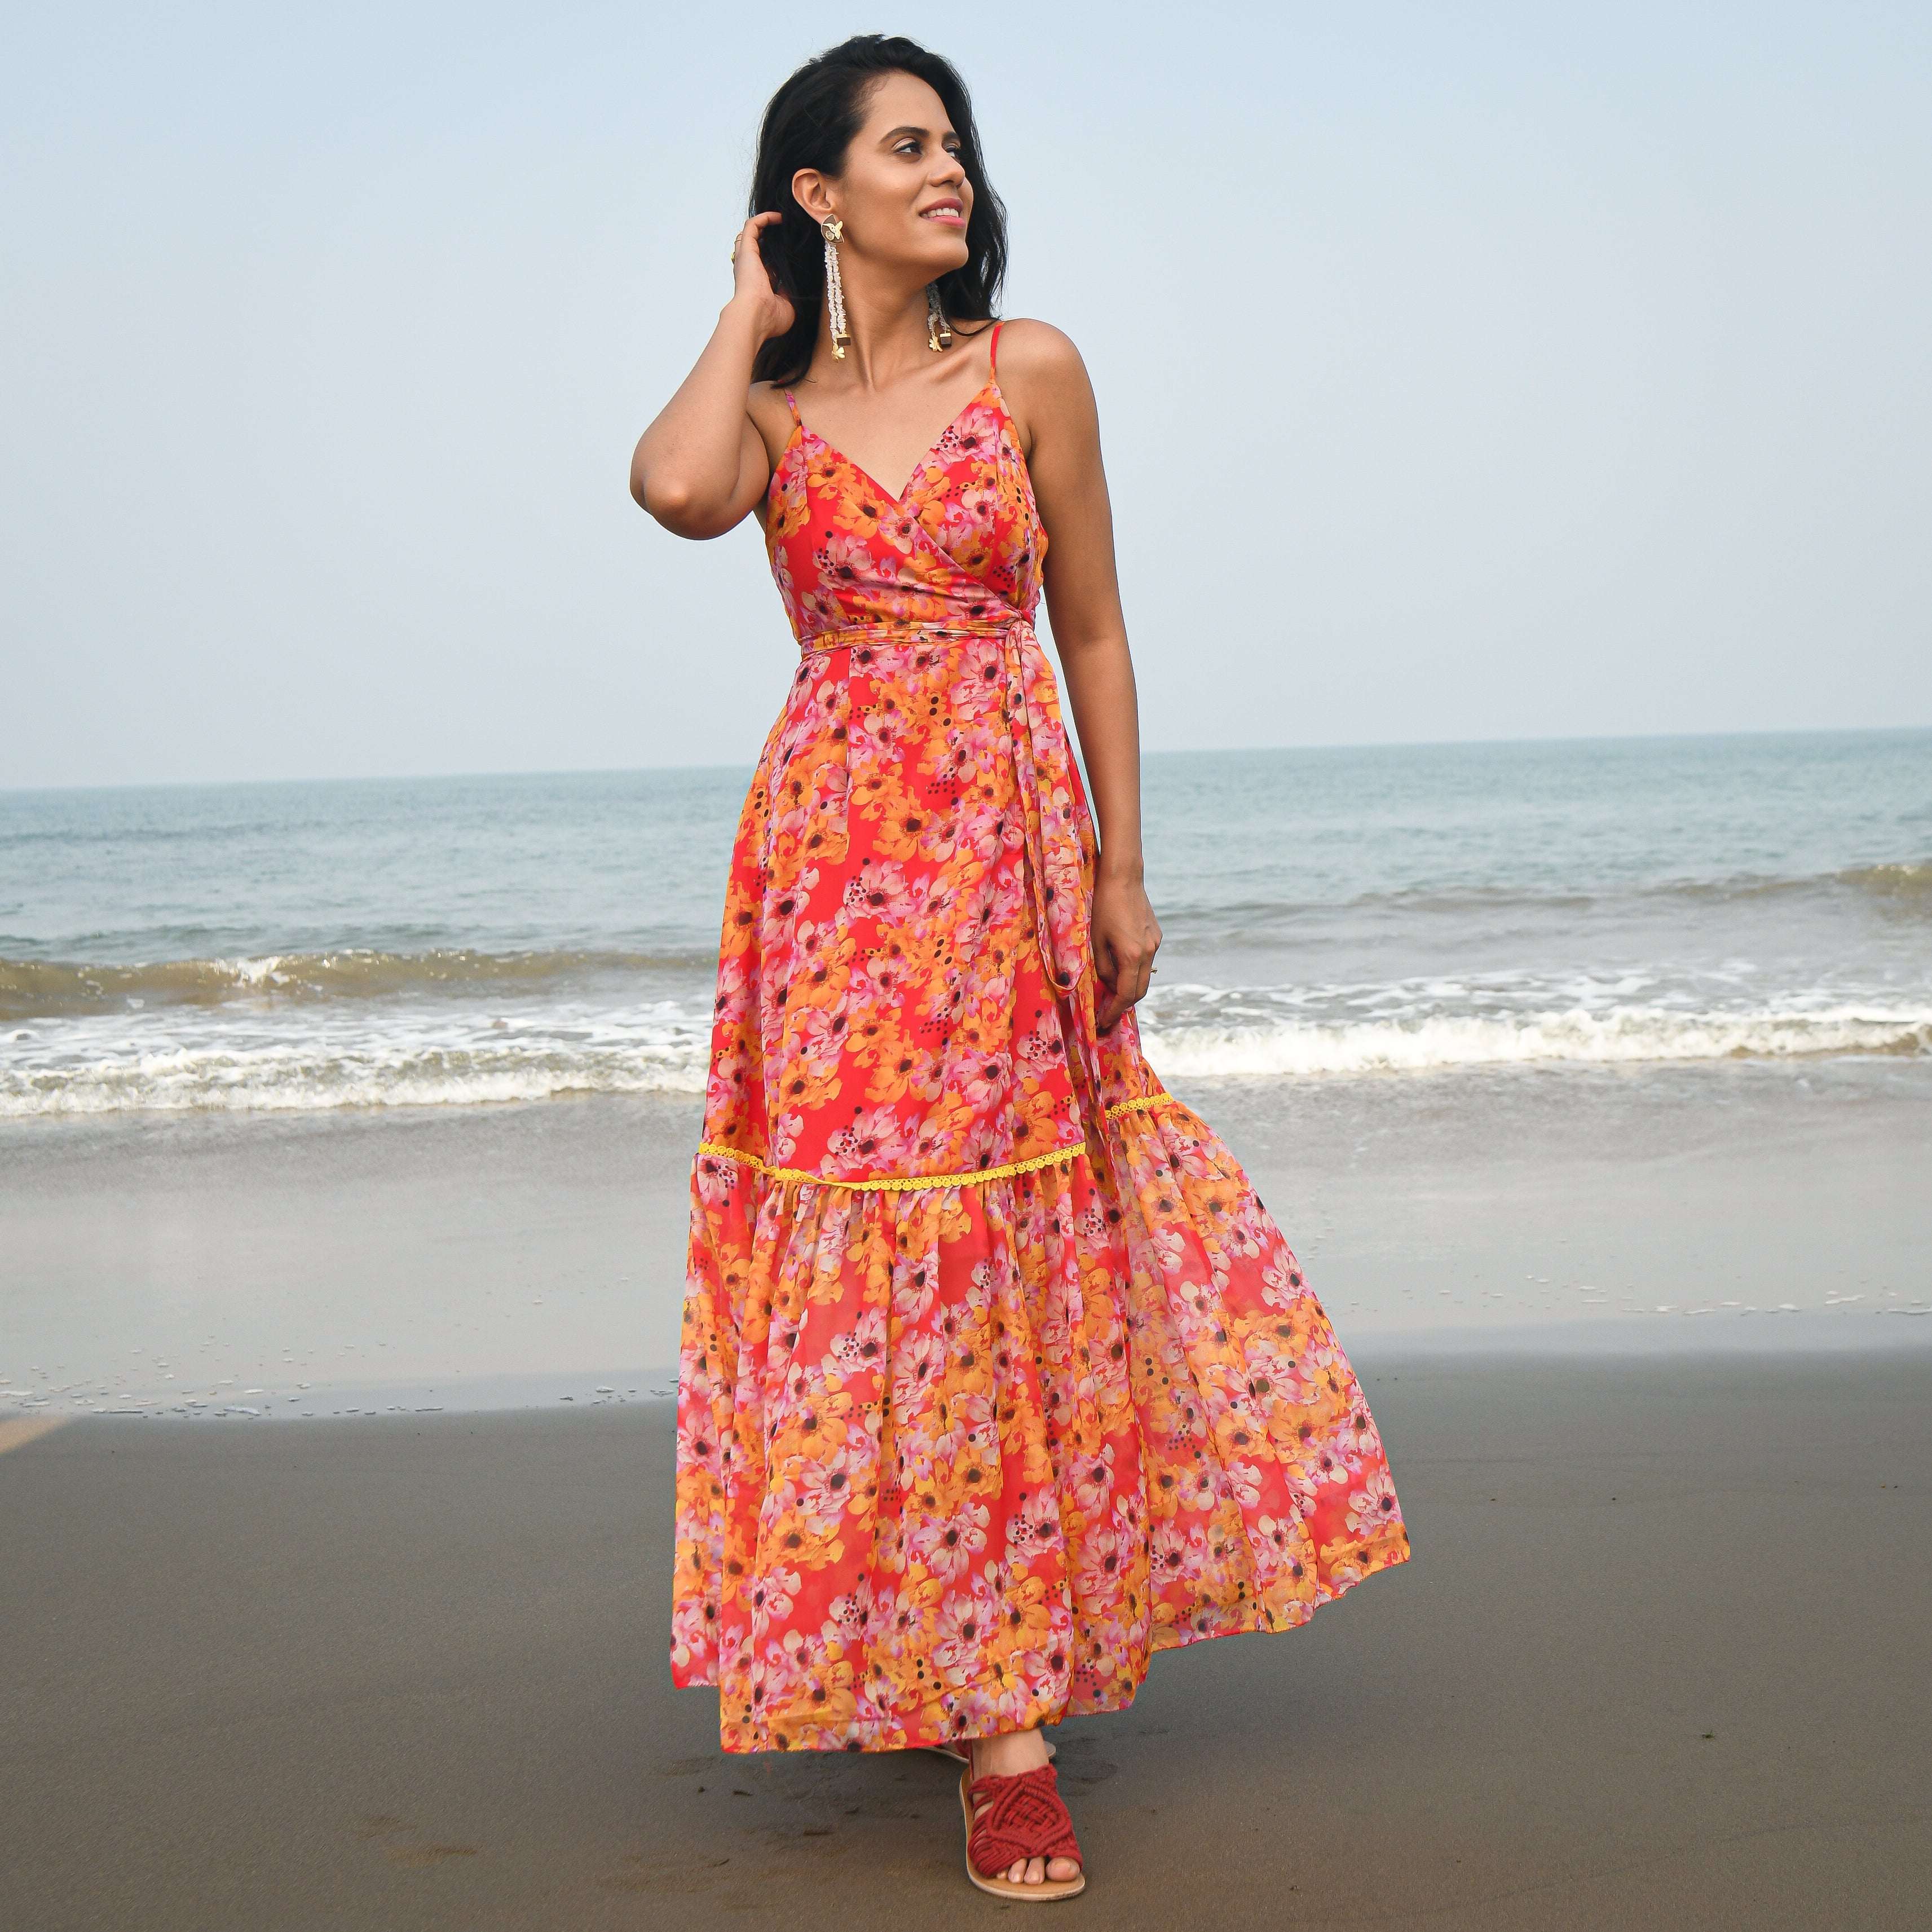 Buy Resort Wear For Women Online, Vacation Dresses For Women